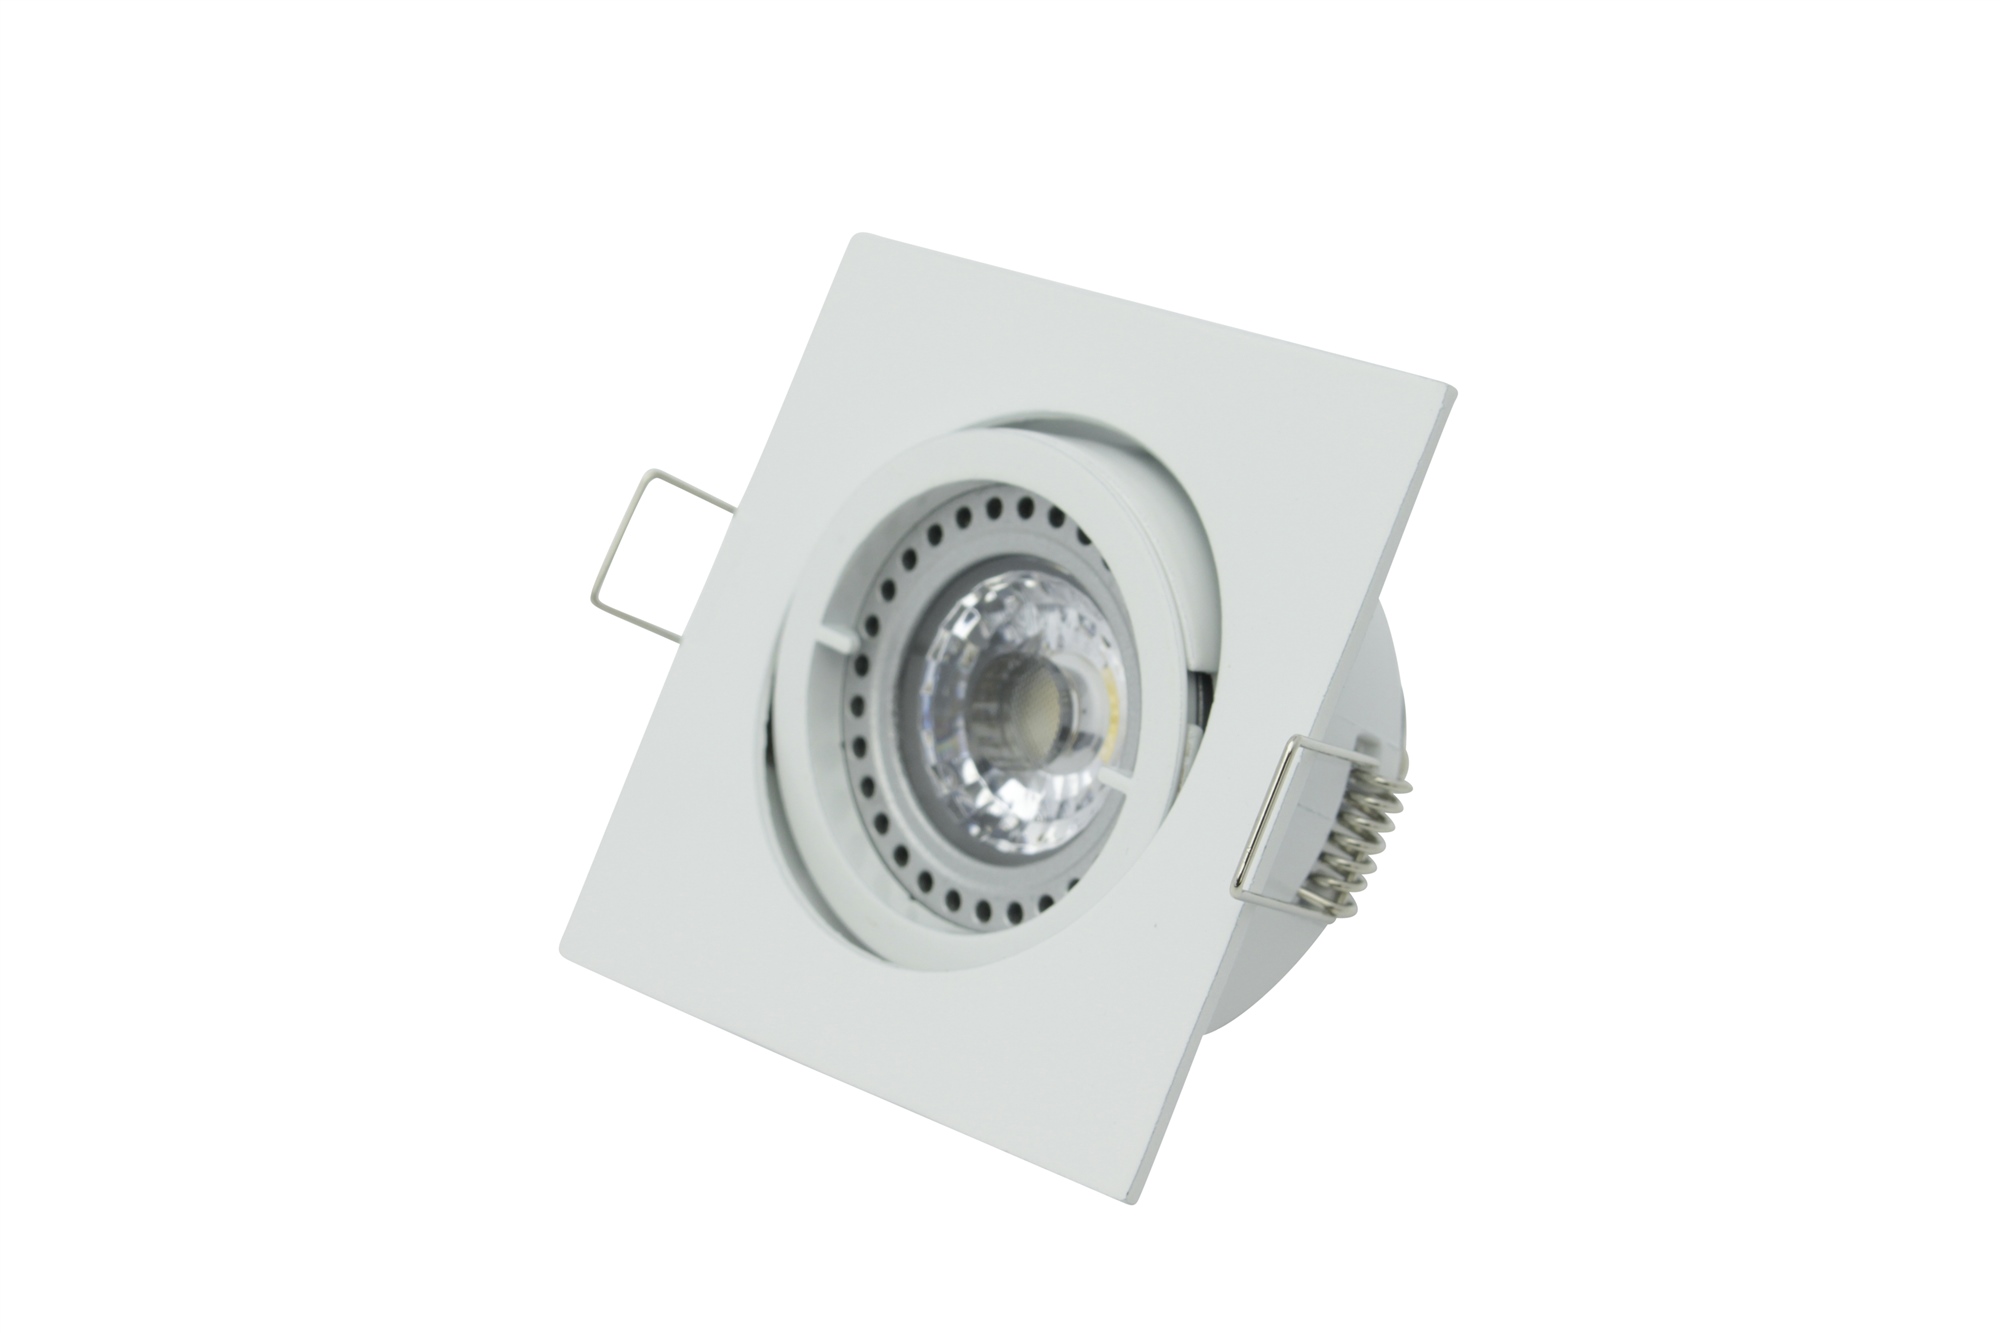 Lampenlux LED-Einbaustrahler Spot Snap eckig weiß schwenkbar 8.2x8.2cm 230V GU10 rostfrei Aluminium